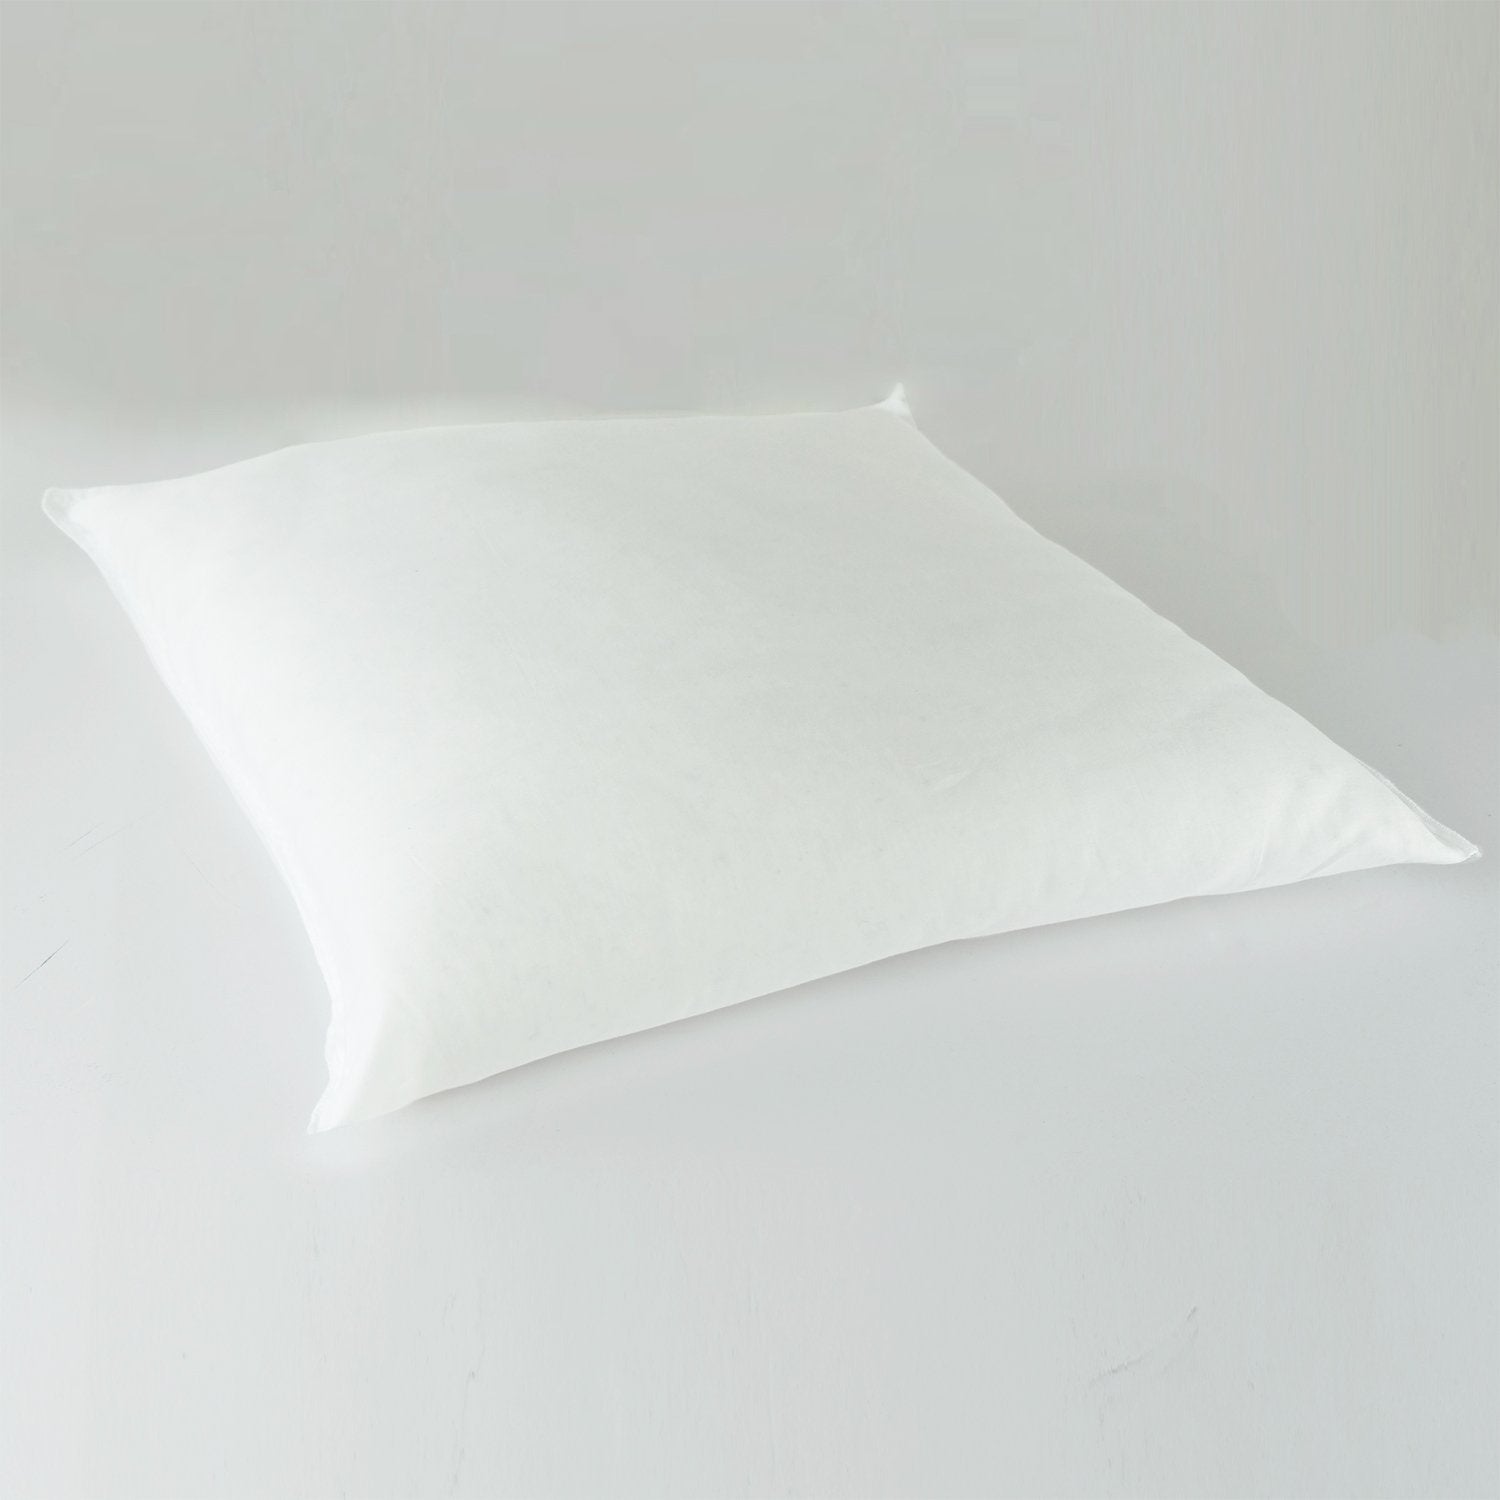 J-Life Kanji White Zabuton Floor Pillow_Pillows & Shams_Zabuton Floor Pillows_100% Cotton_Reversible_Handmade